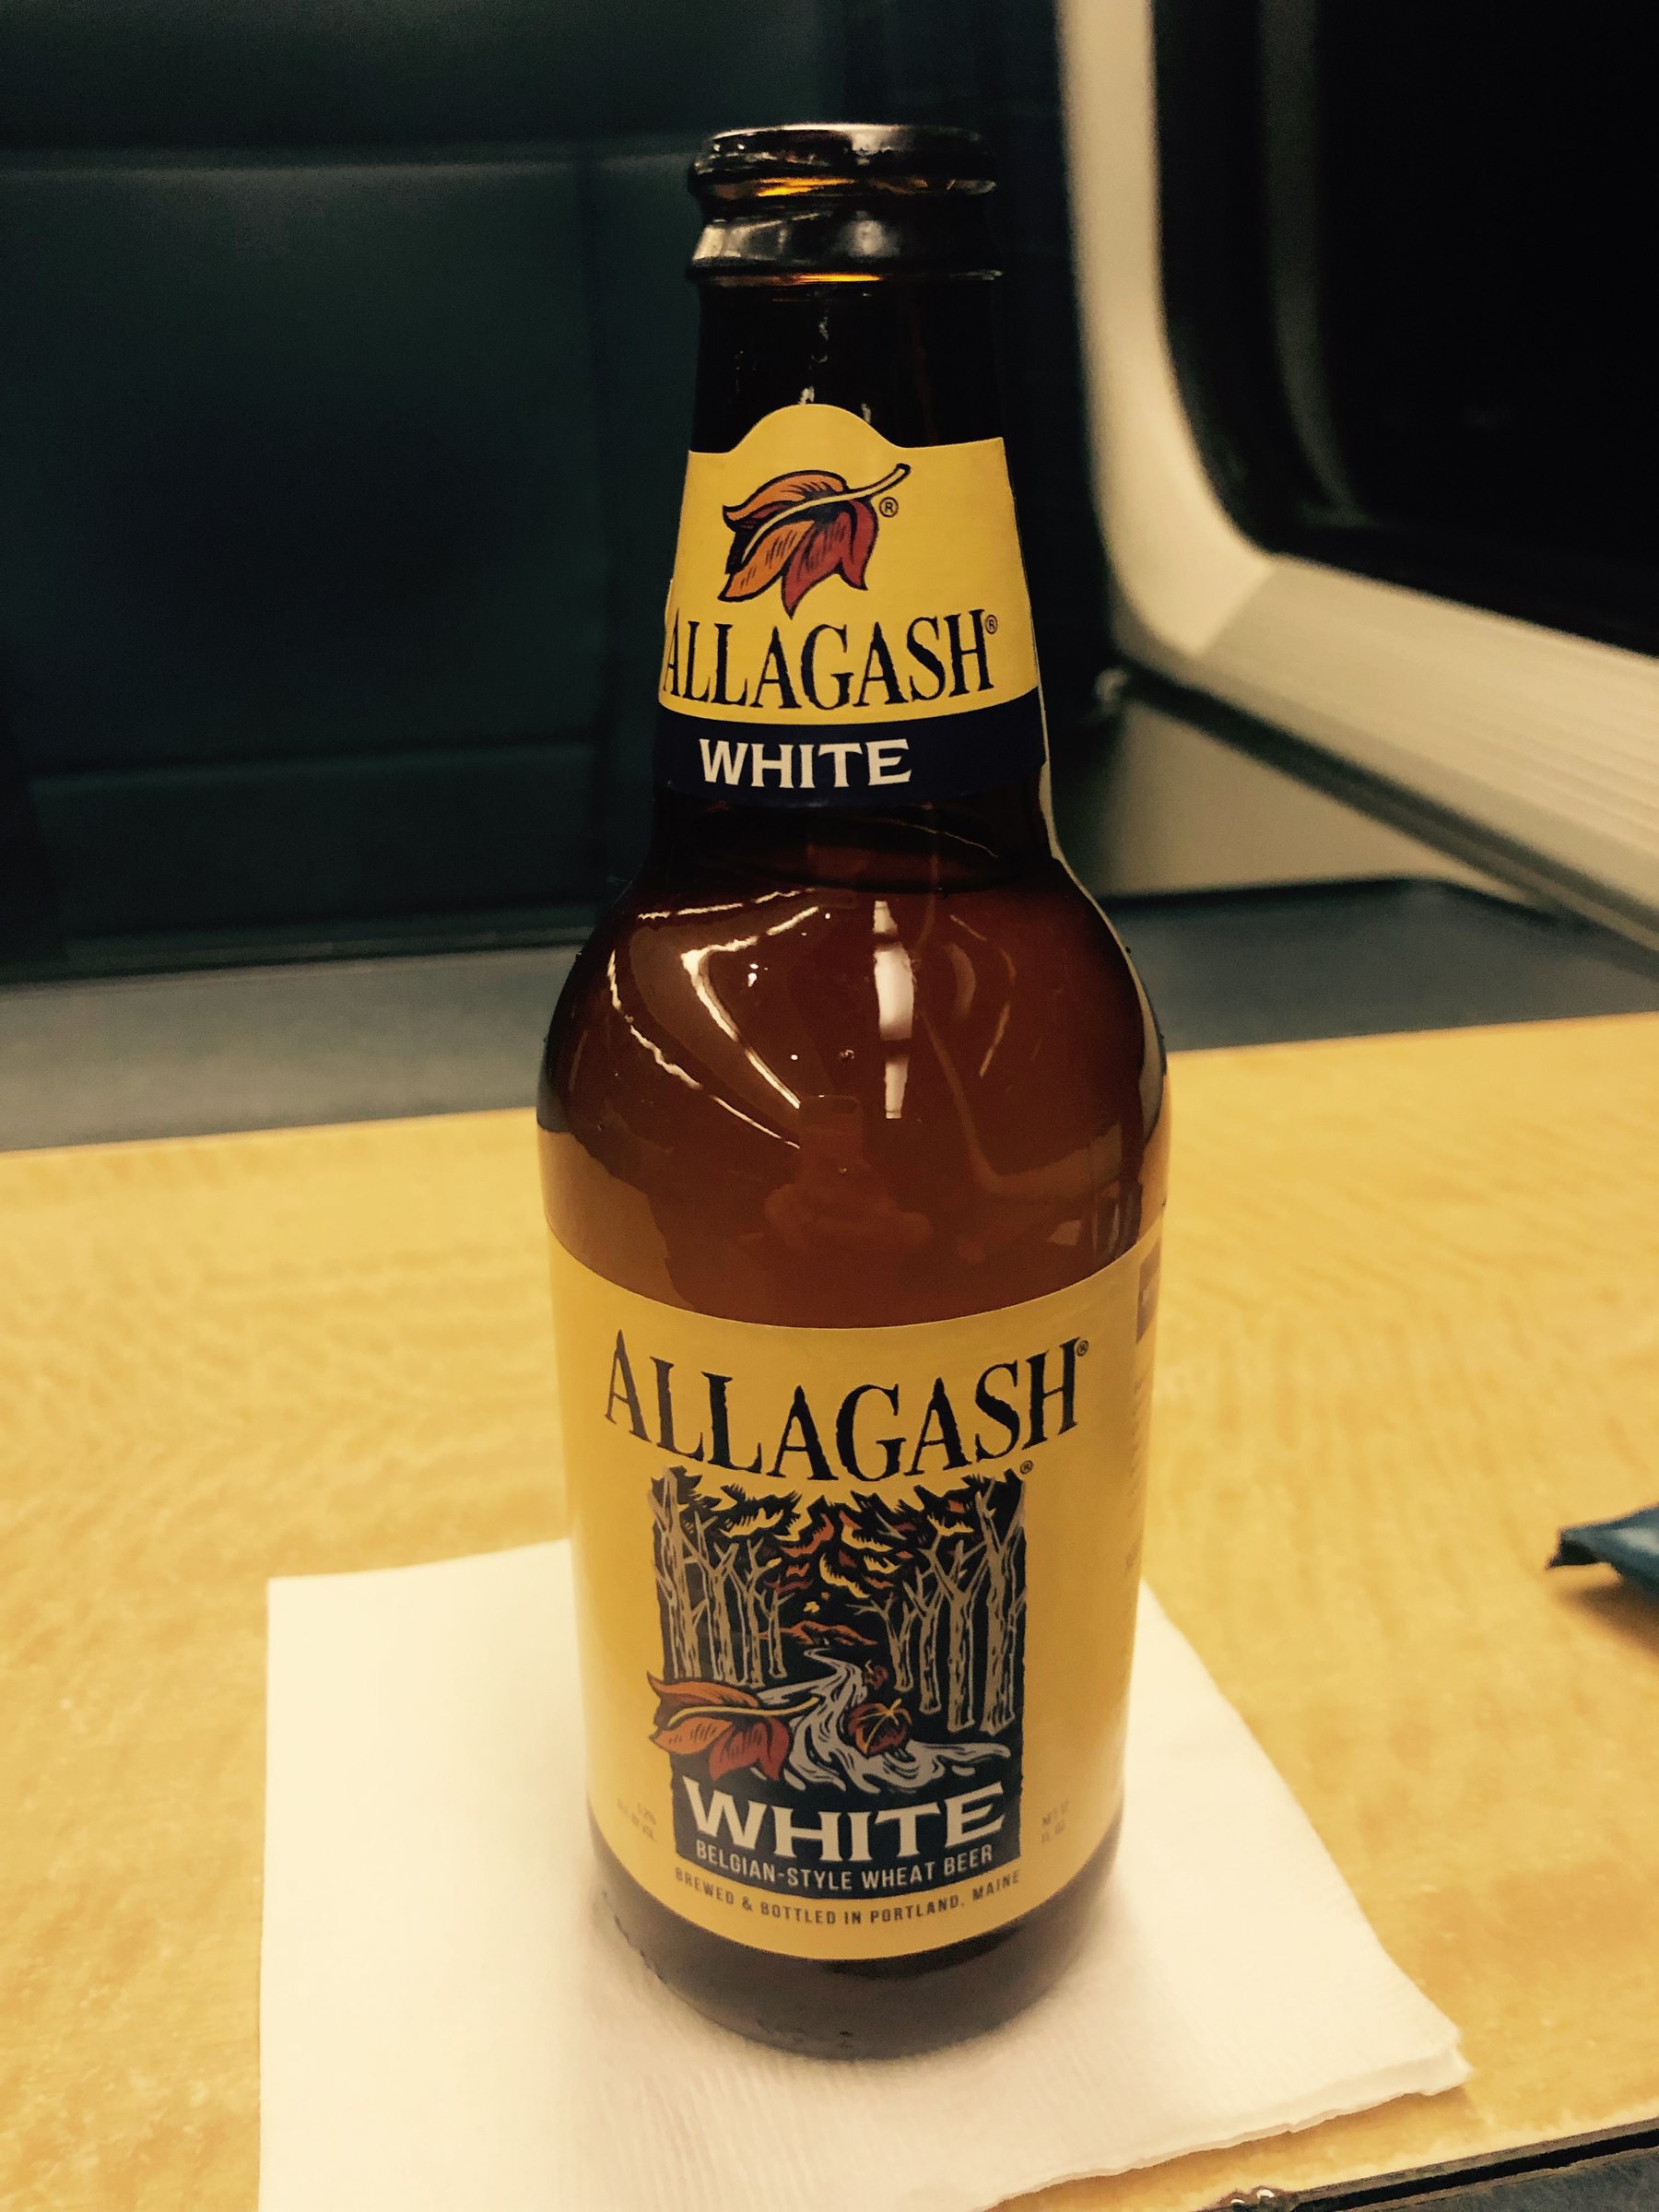 Bottle of Allagash White beer.